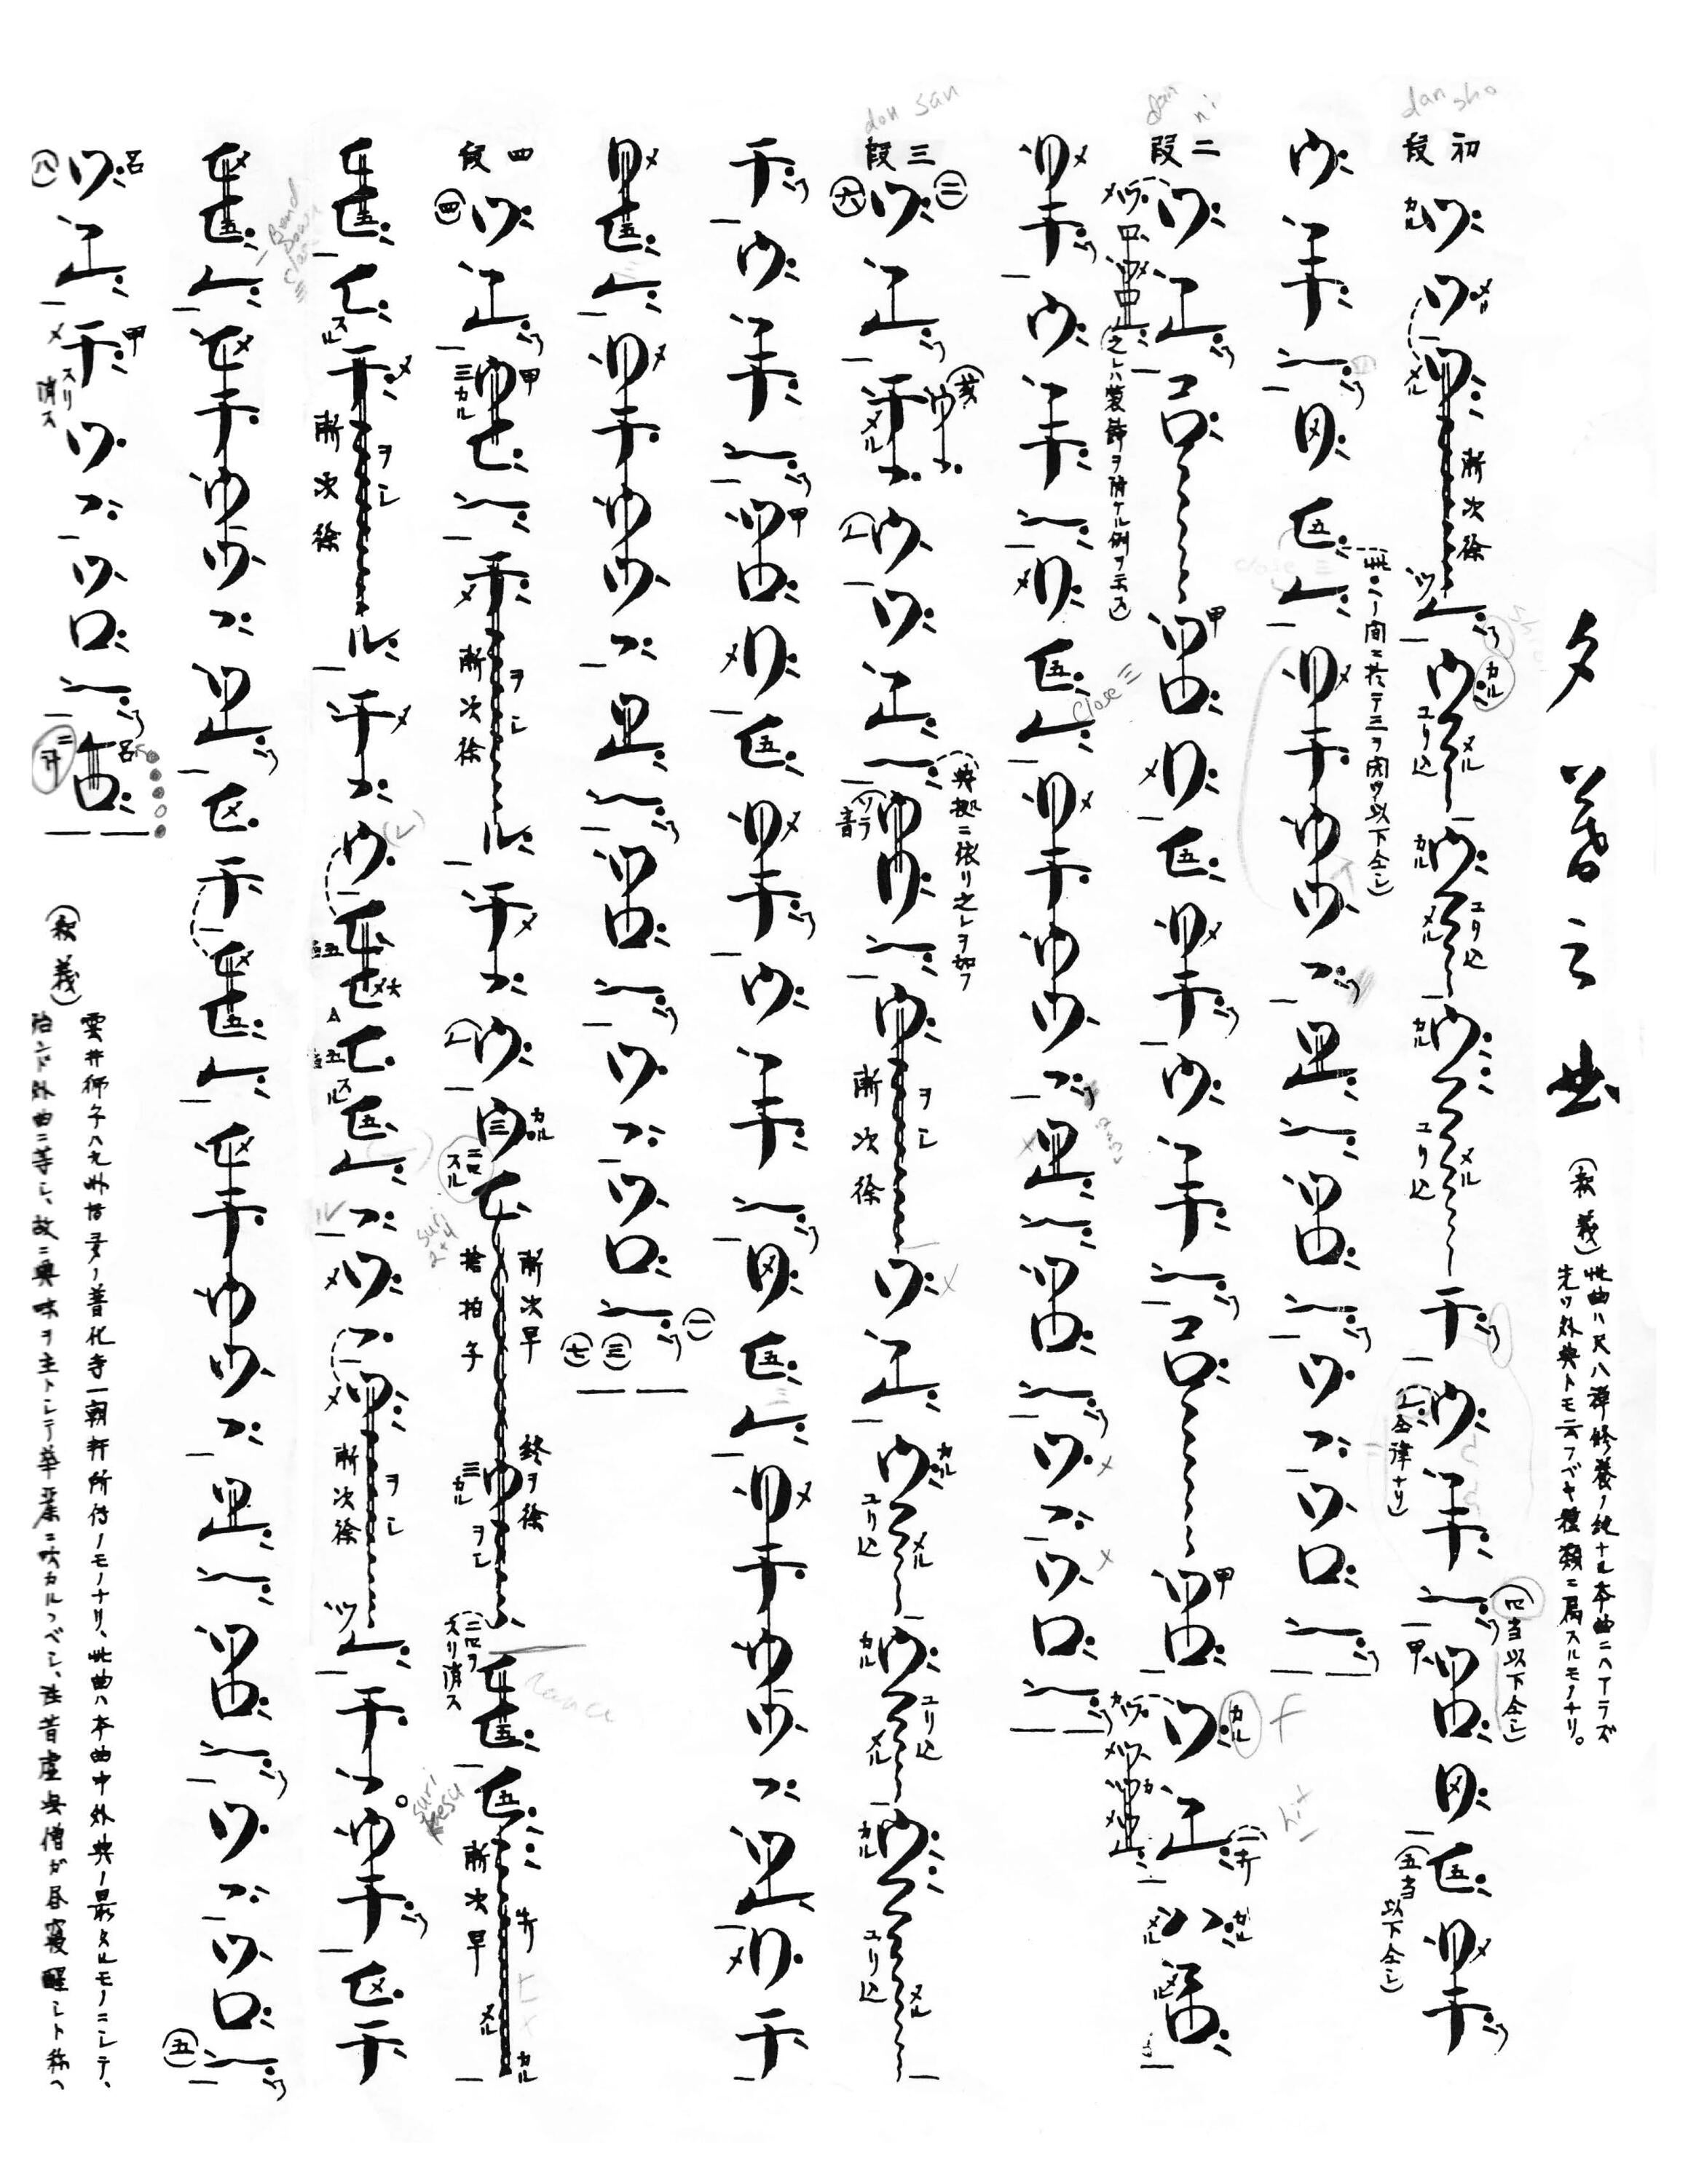 Shakuhachi notation